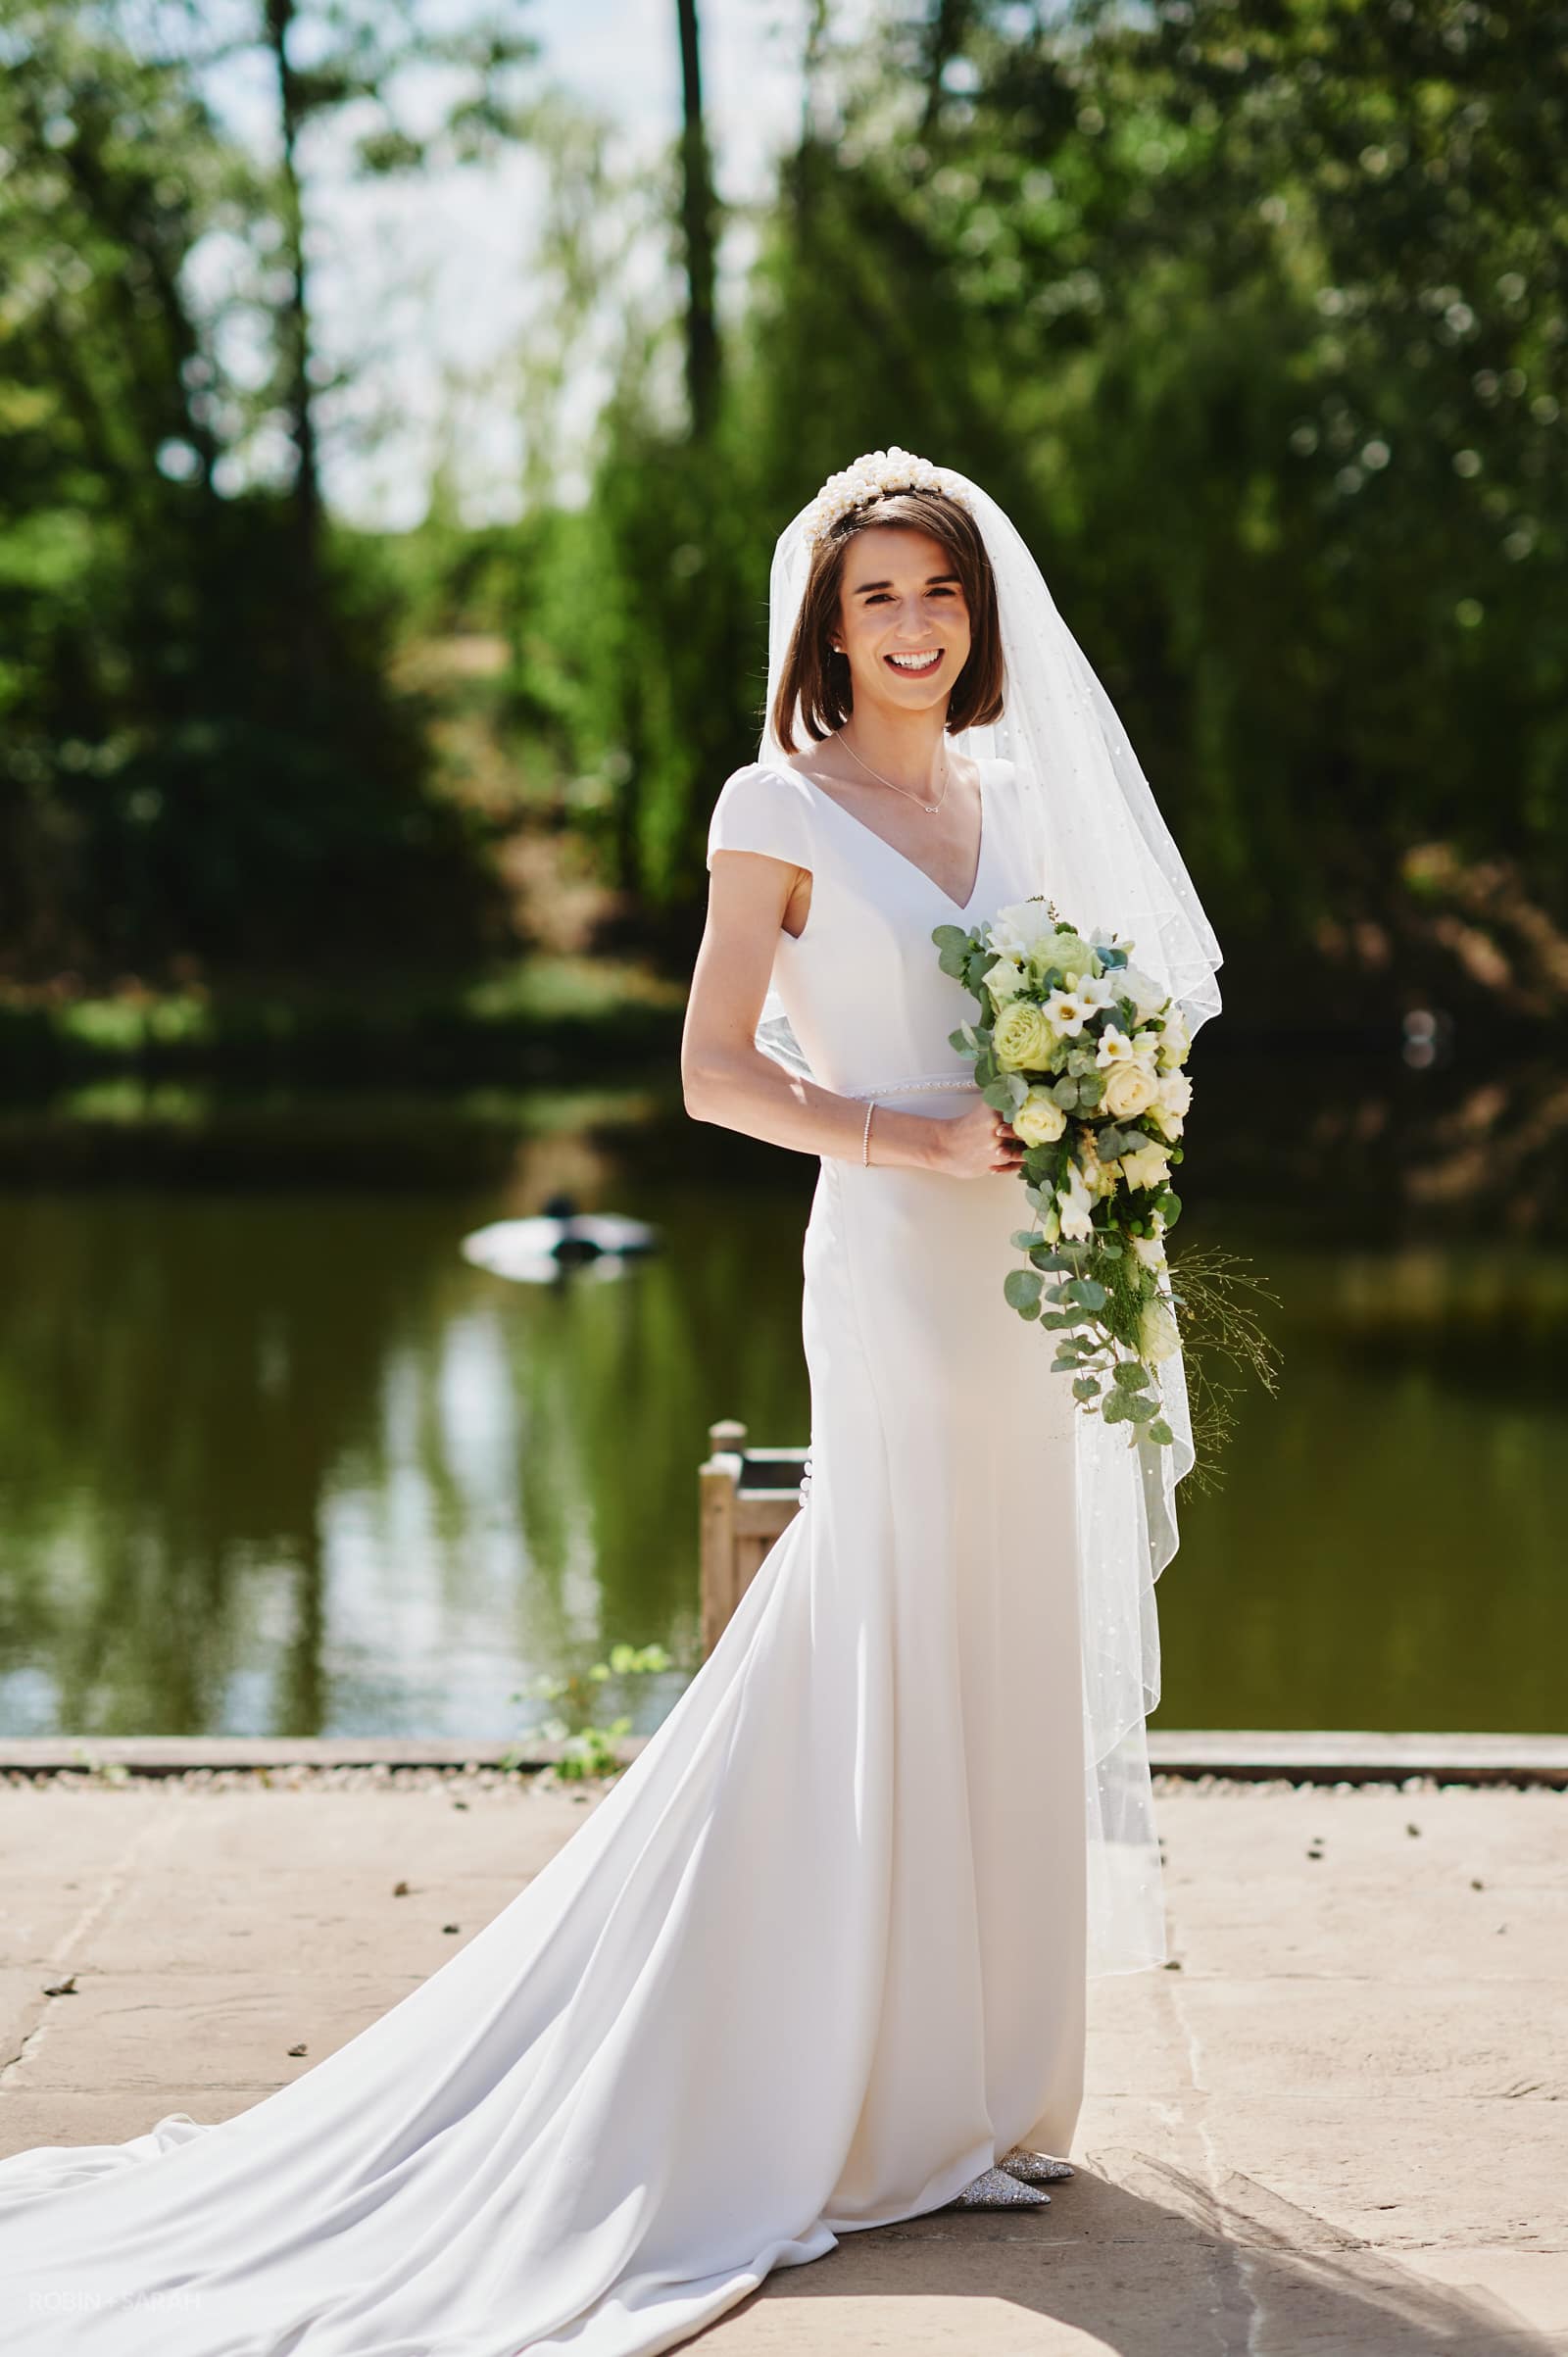 Portrait of bride in beautiful wedding dress with flowing veil